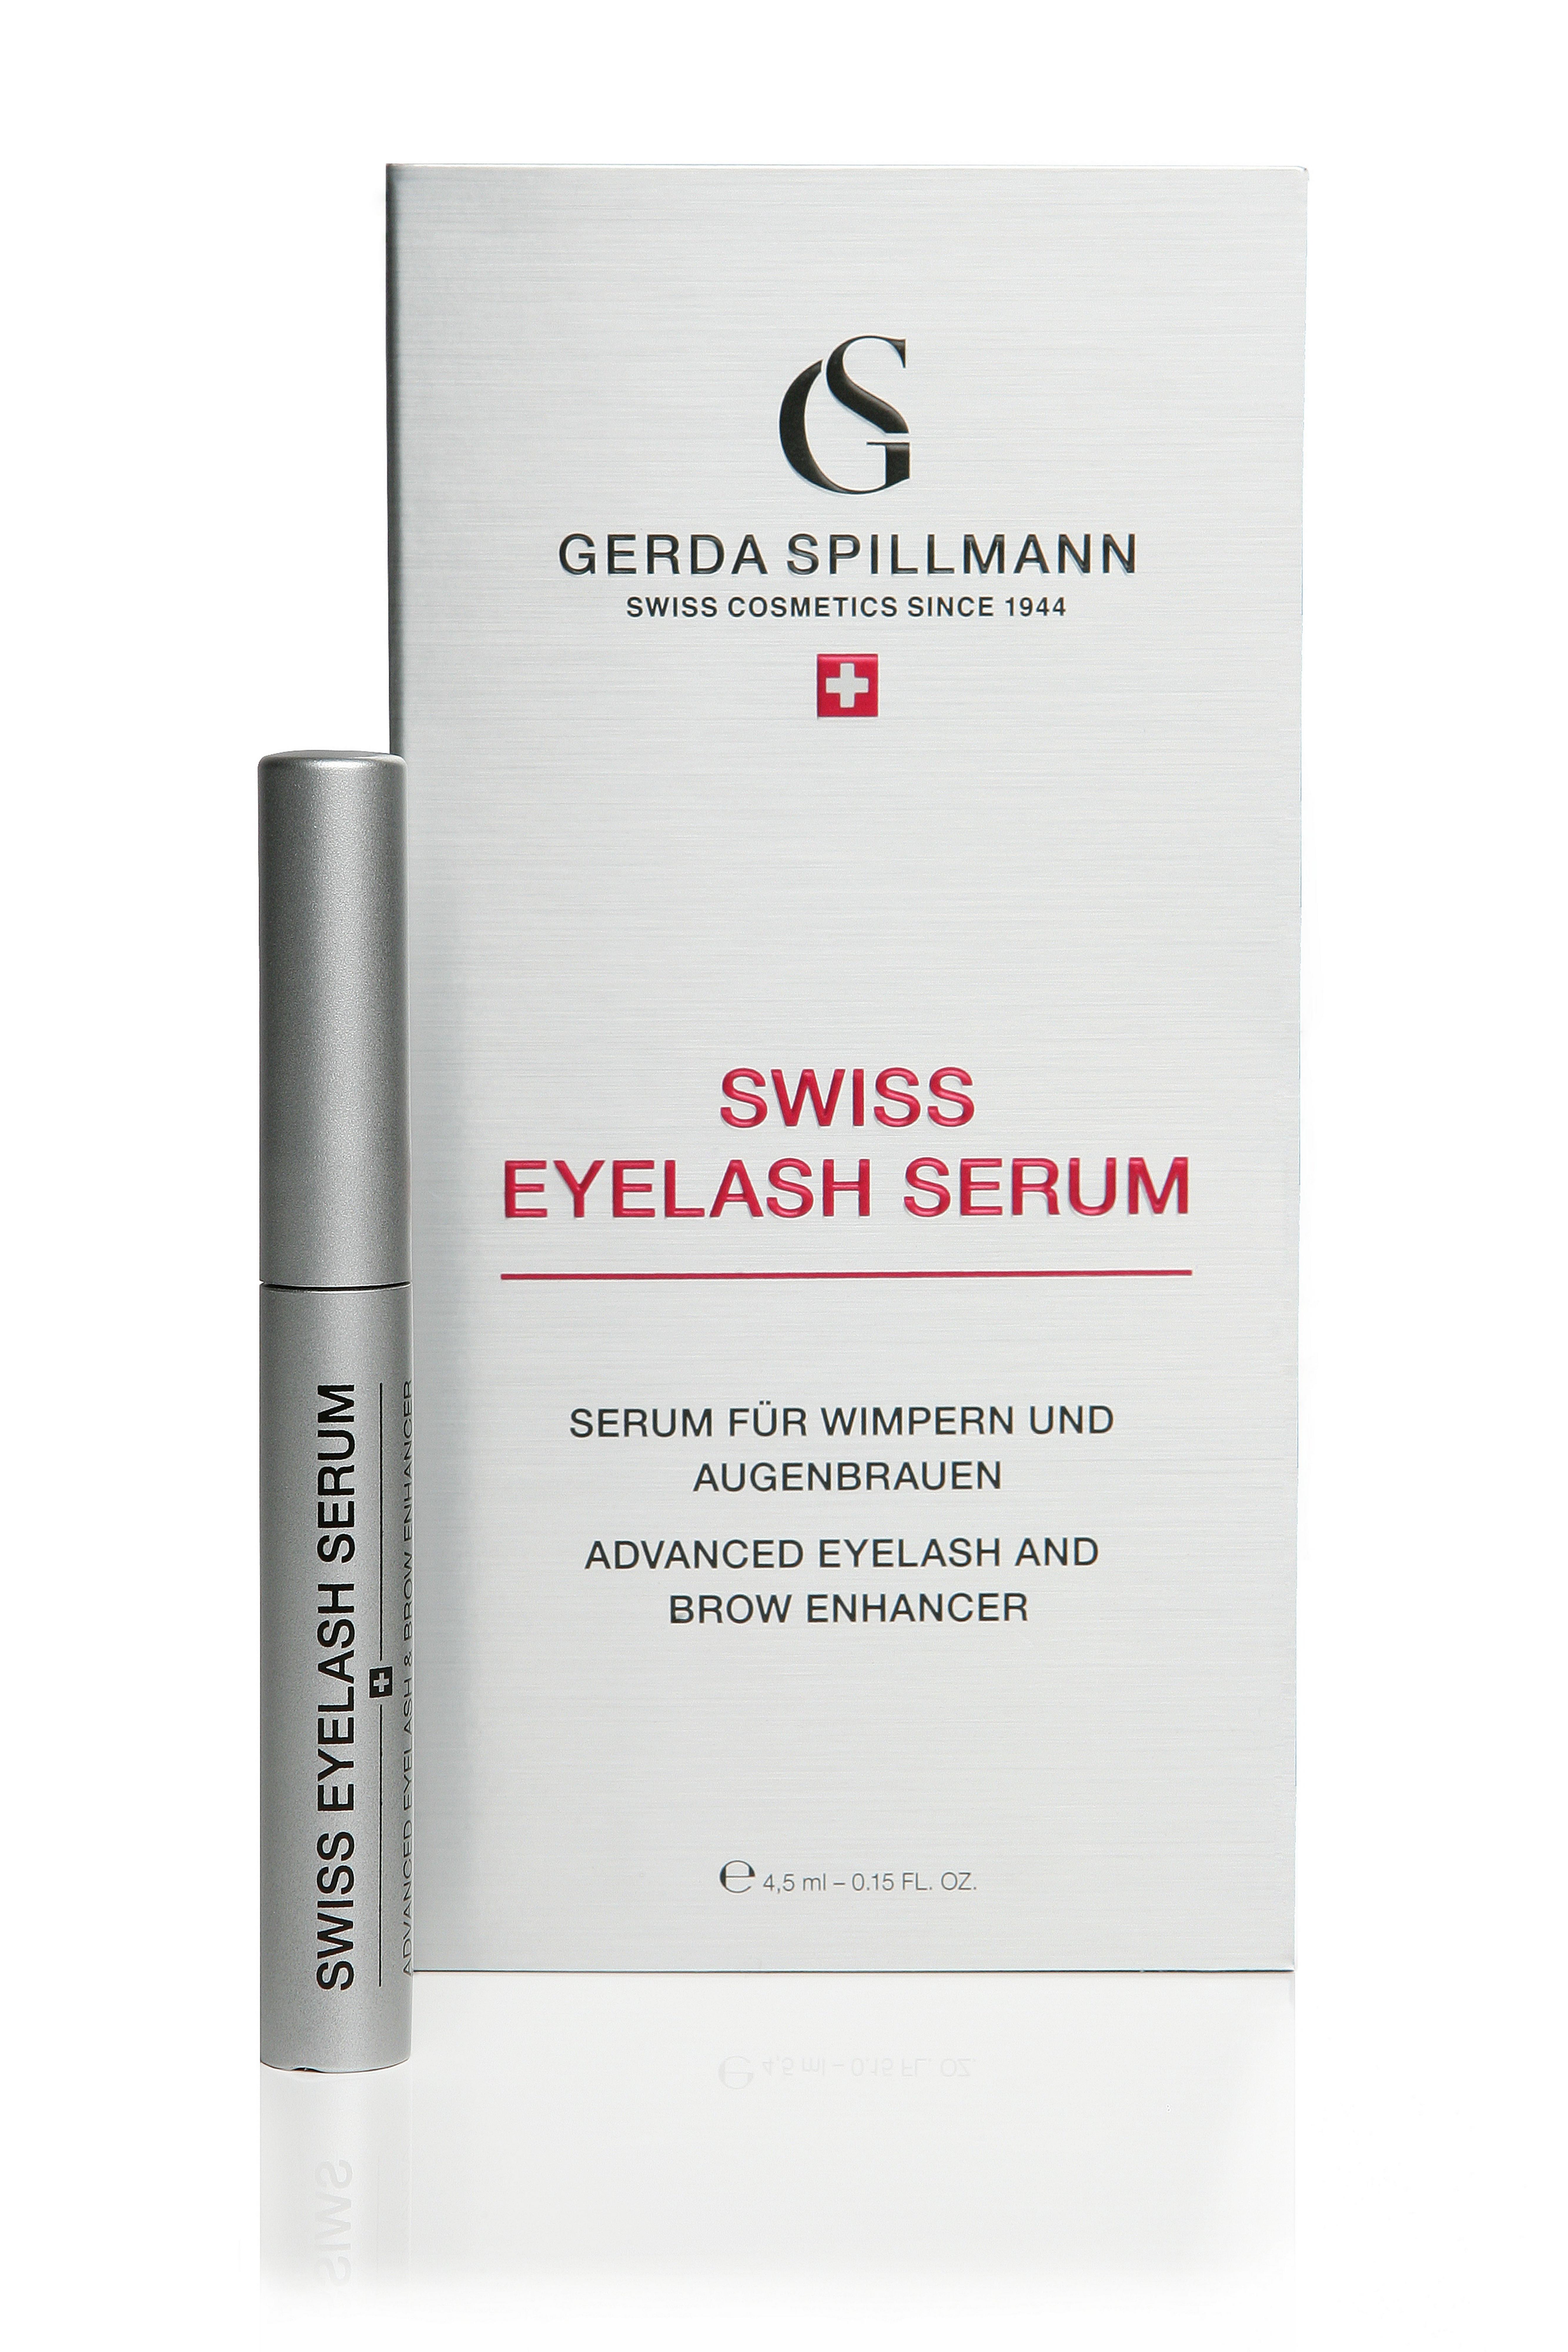 Image of GERDA SPILLMANN Swiss Eyelash Serum - 4.5ML